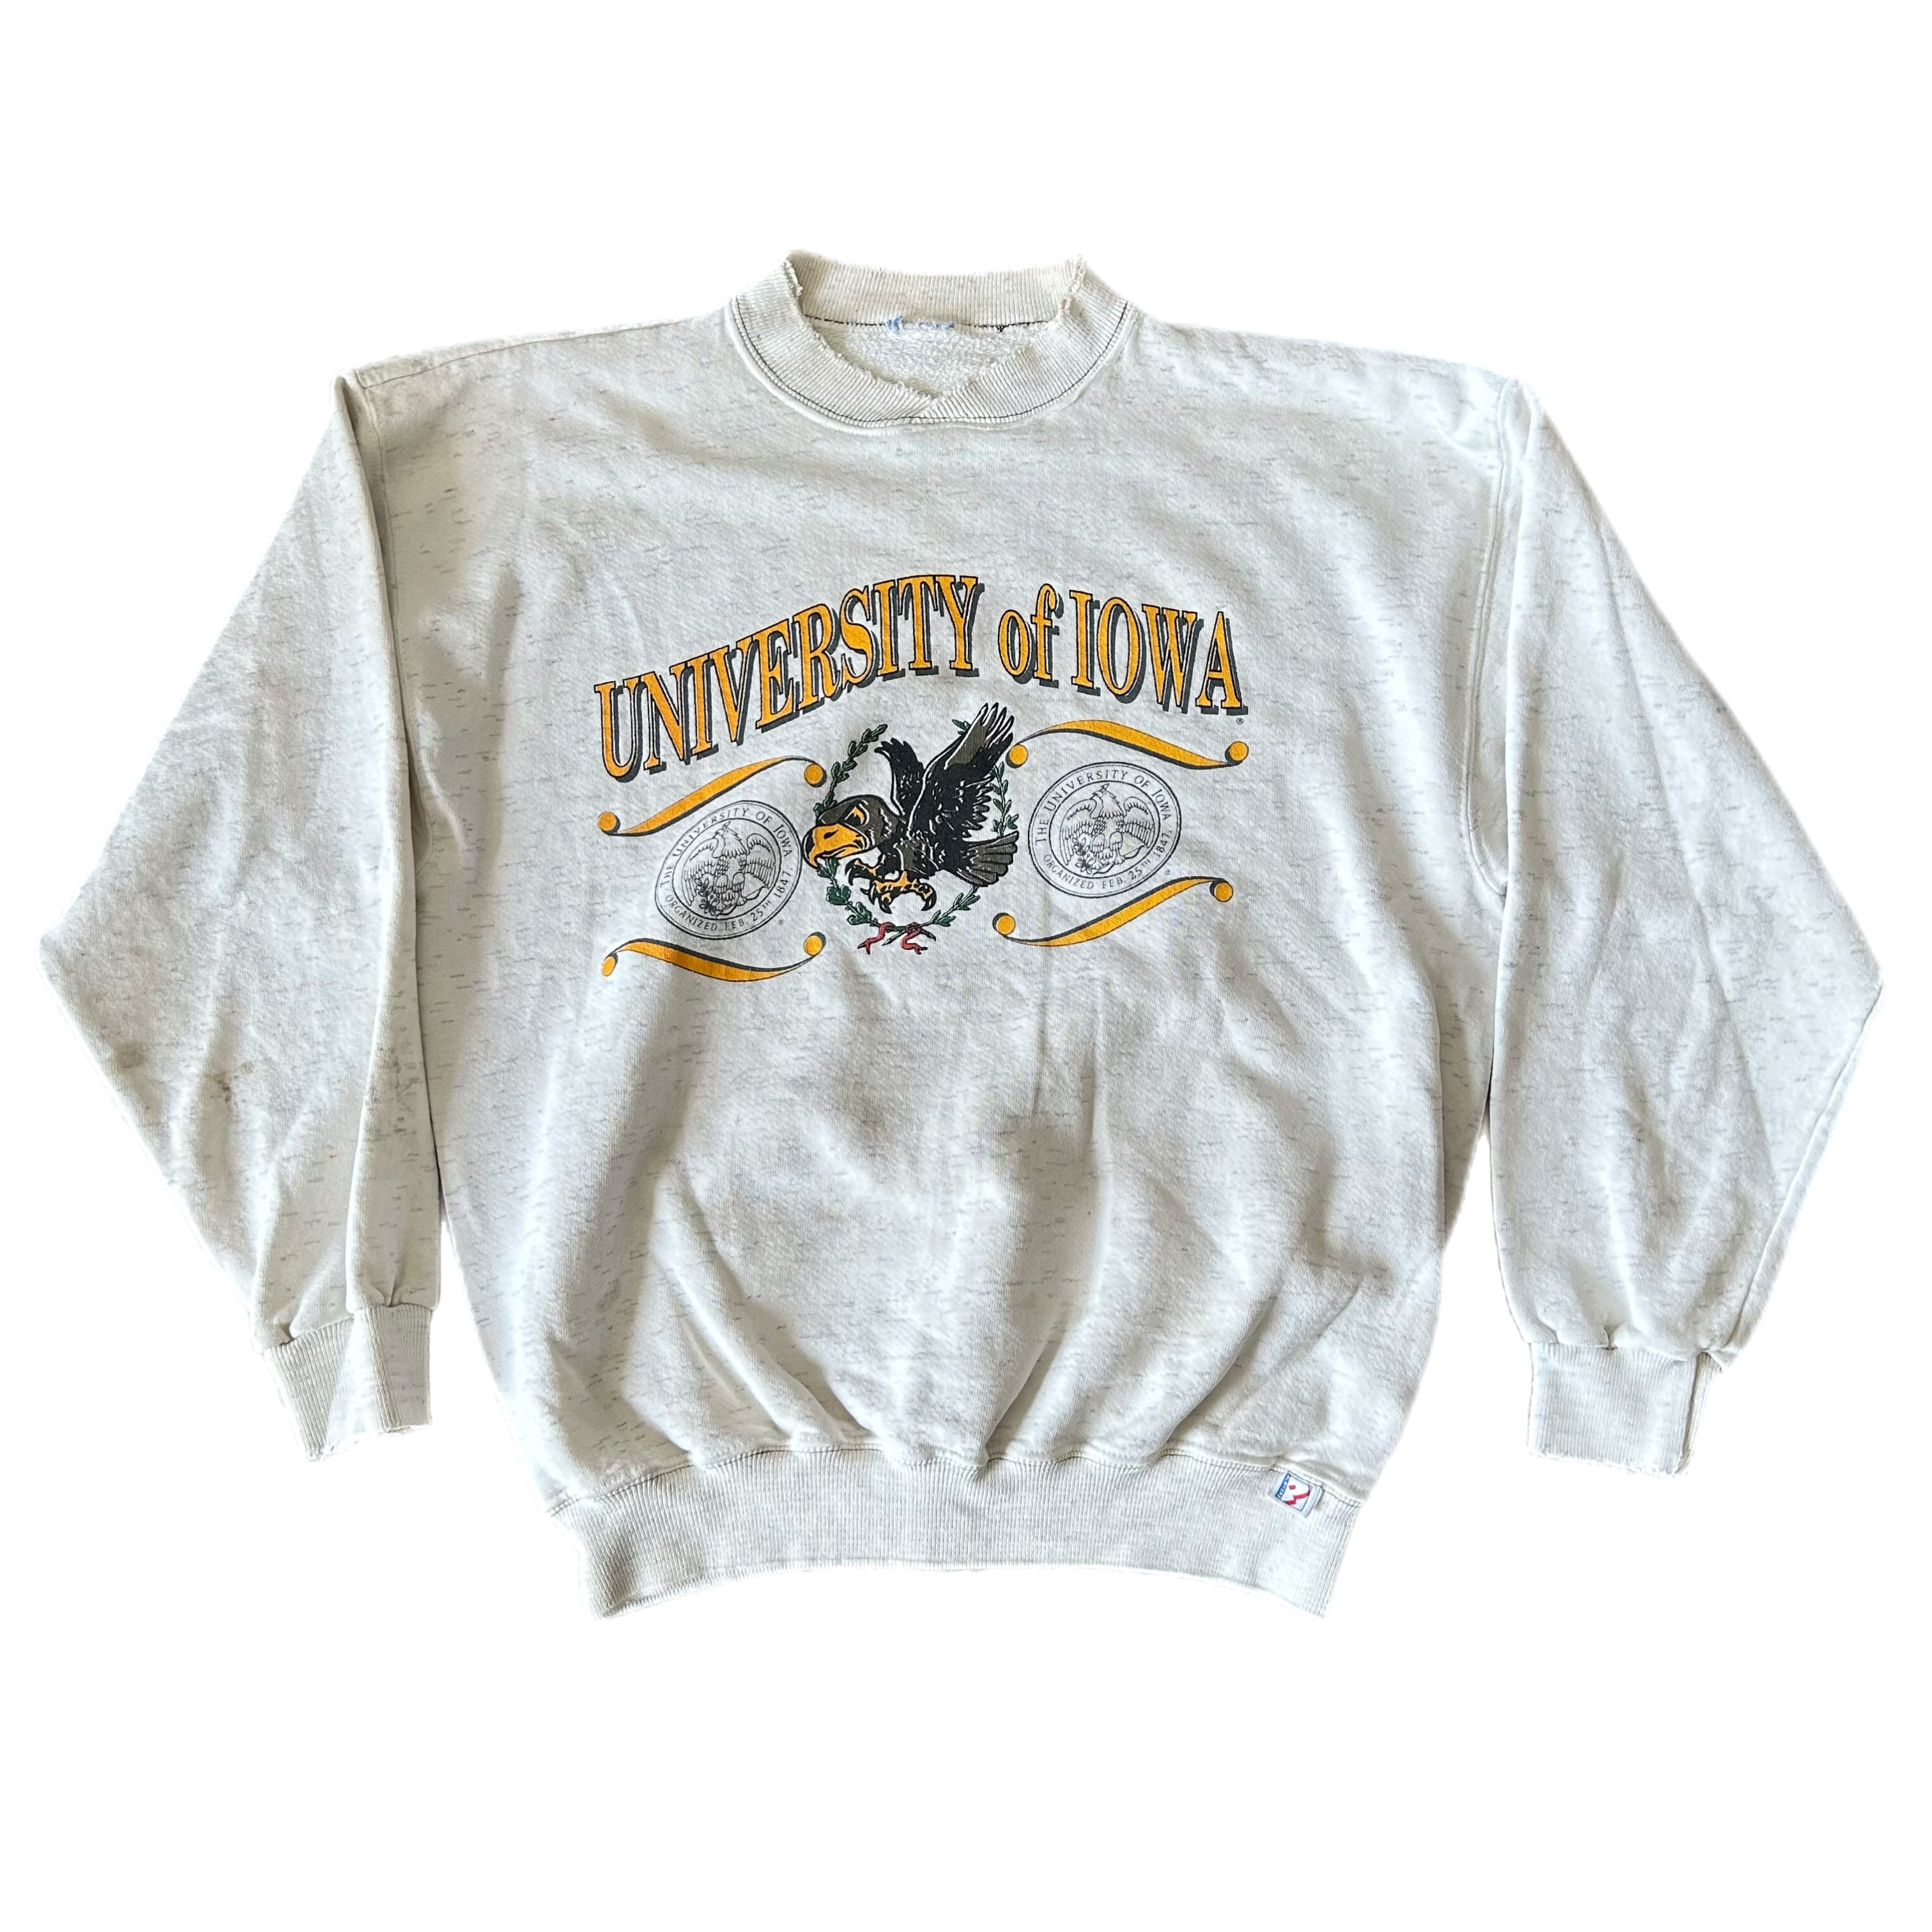 Vintage University of Iowa Crewneck Sweatshirt